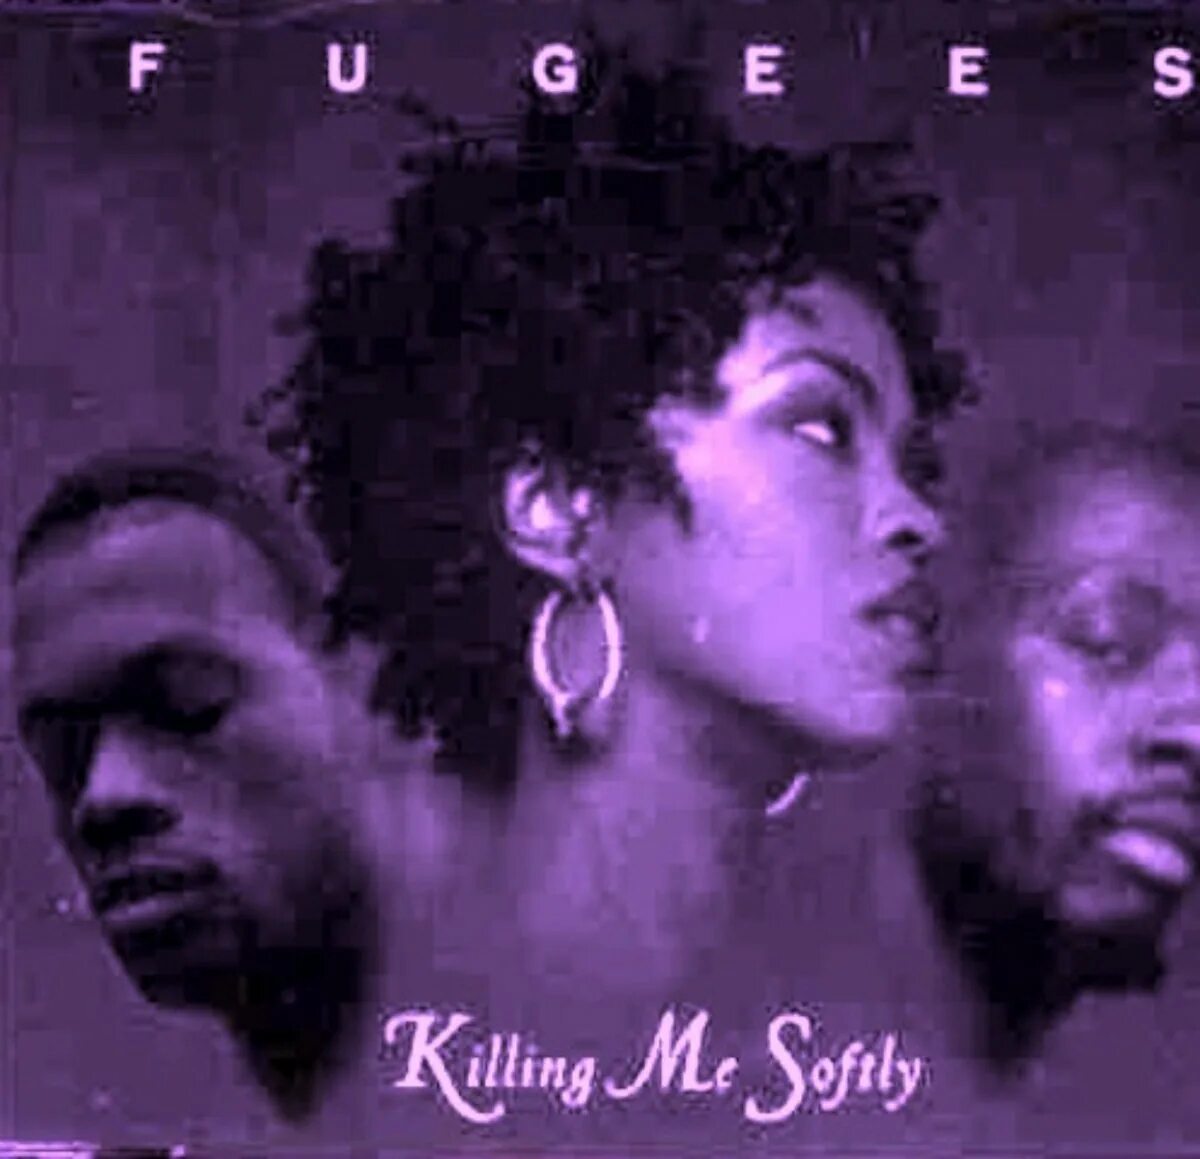 Fugees Fugees - Killing me Softly. Fugees 2021. Fugees Killing me Softly with his. Fugees Killing me Softly with his Song. Fugees killing